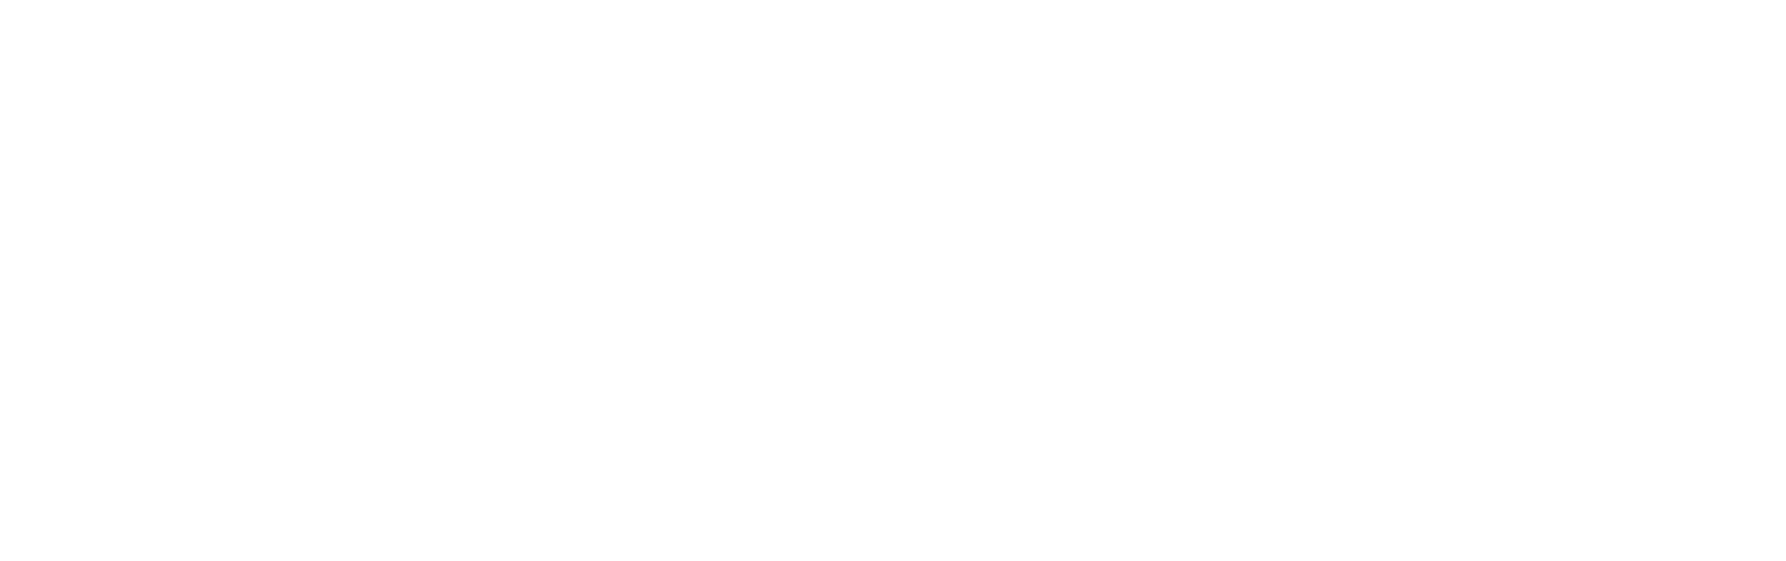 Taylor Family Vineyards | Napa Valley, California Logo